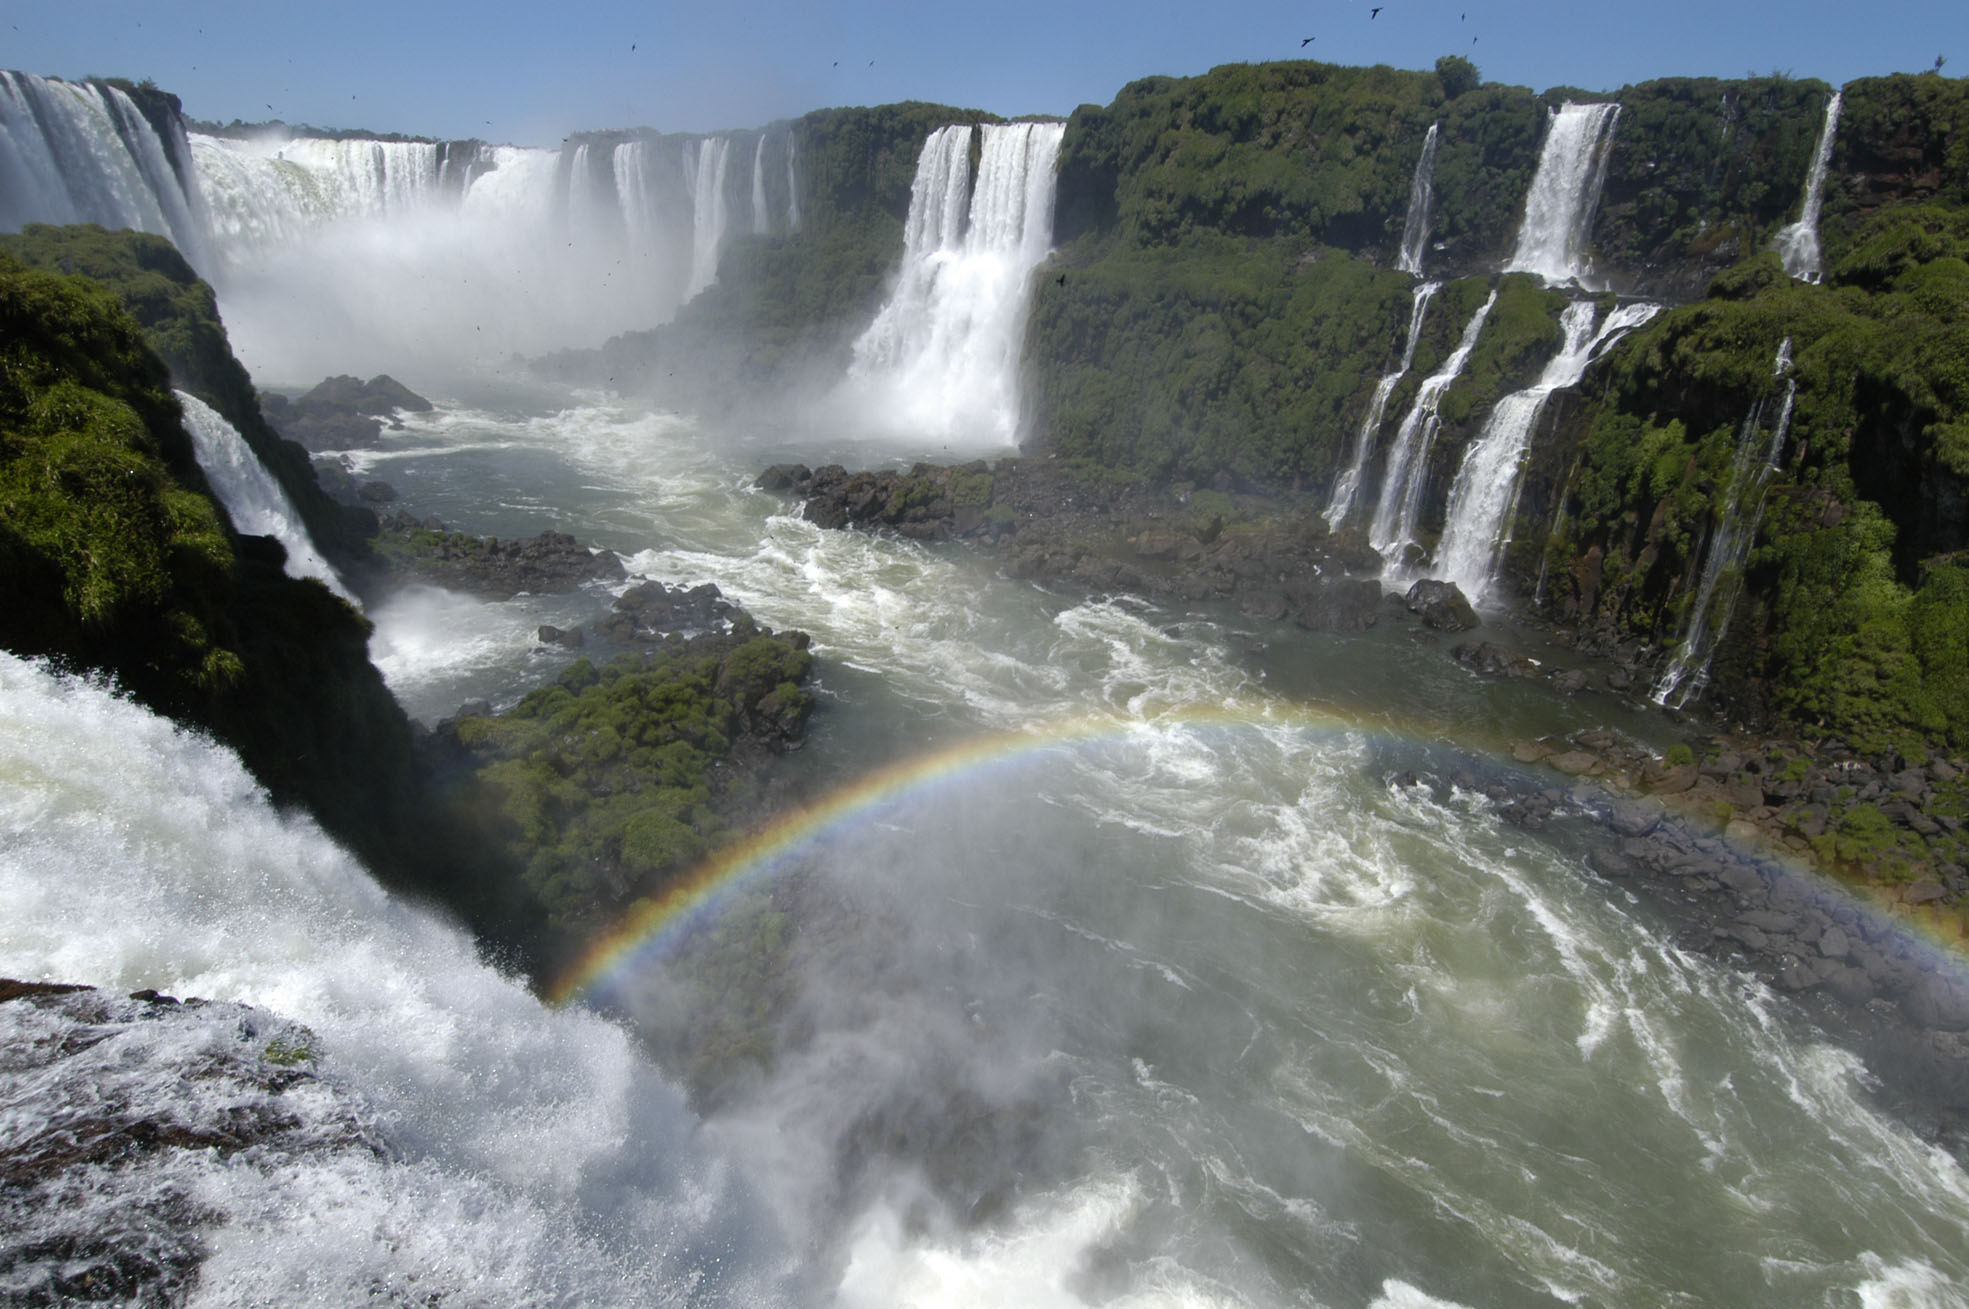 Download this Iguaz Falls Brazil picture